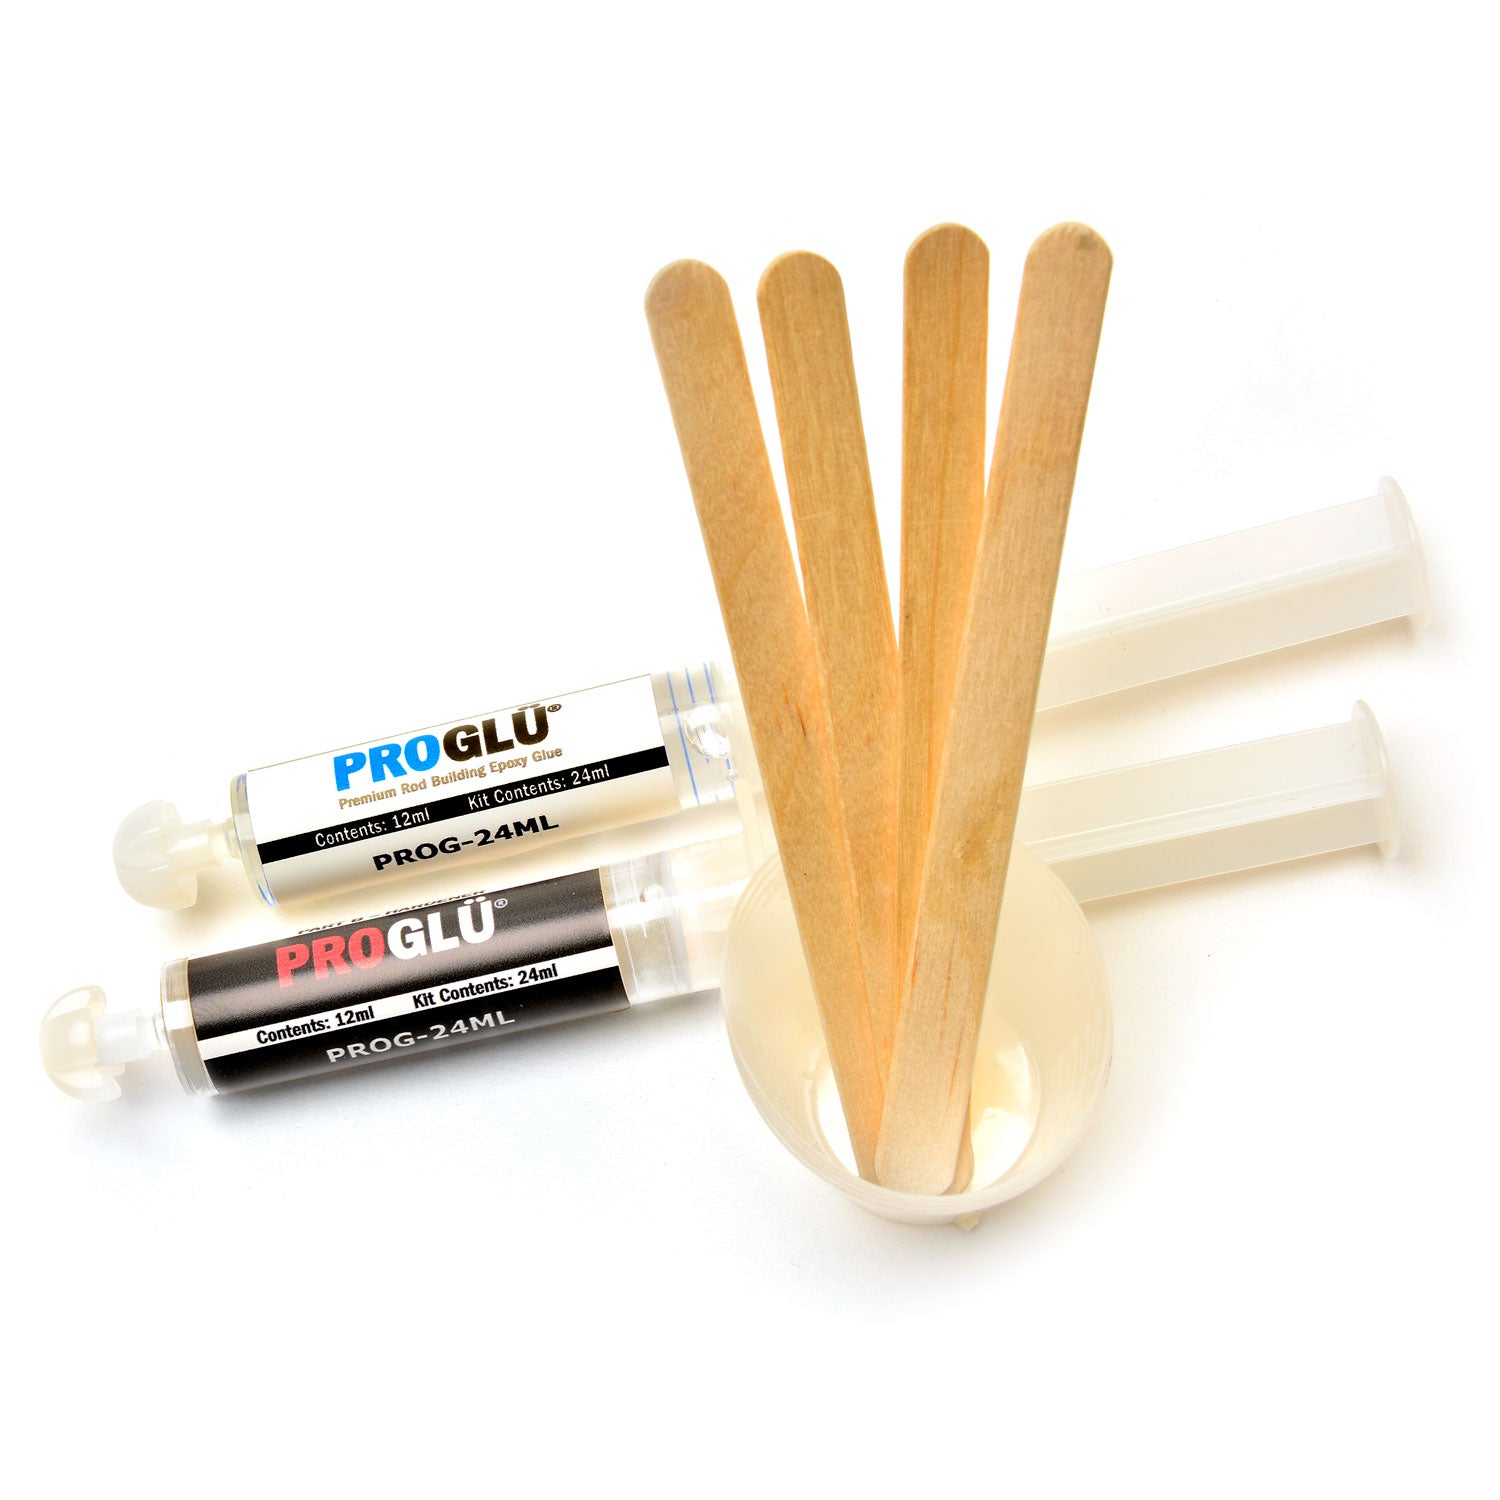 ProGlu Premium Rod Building Epoxy Glue 24ML Pre-Loaded Syringe Kit